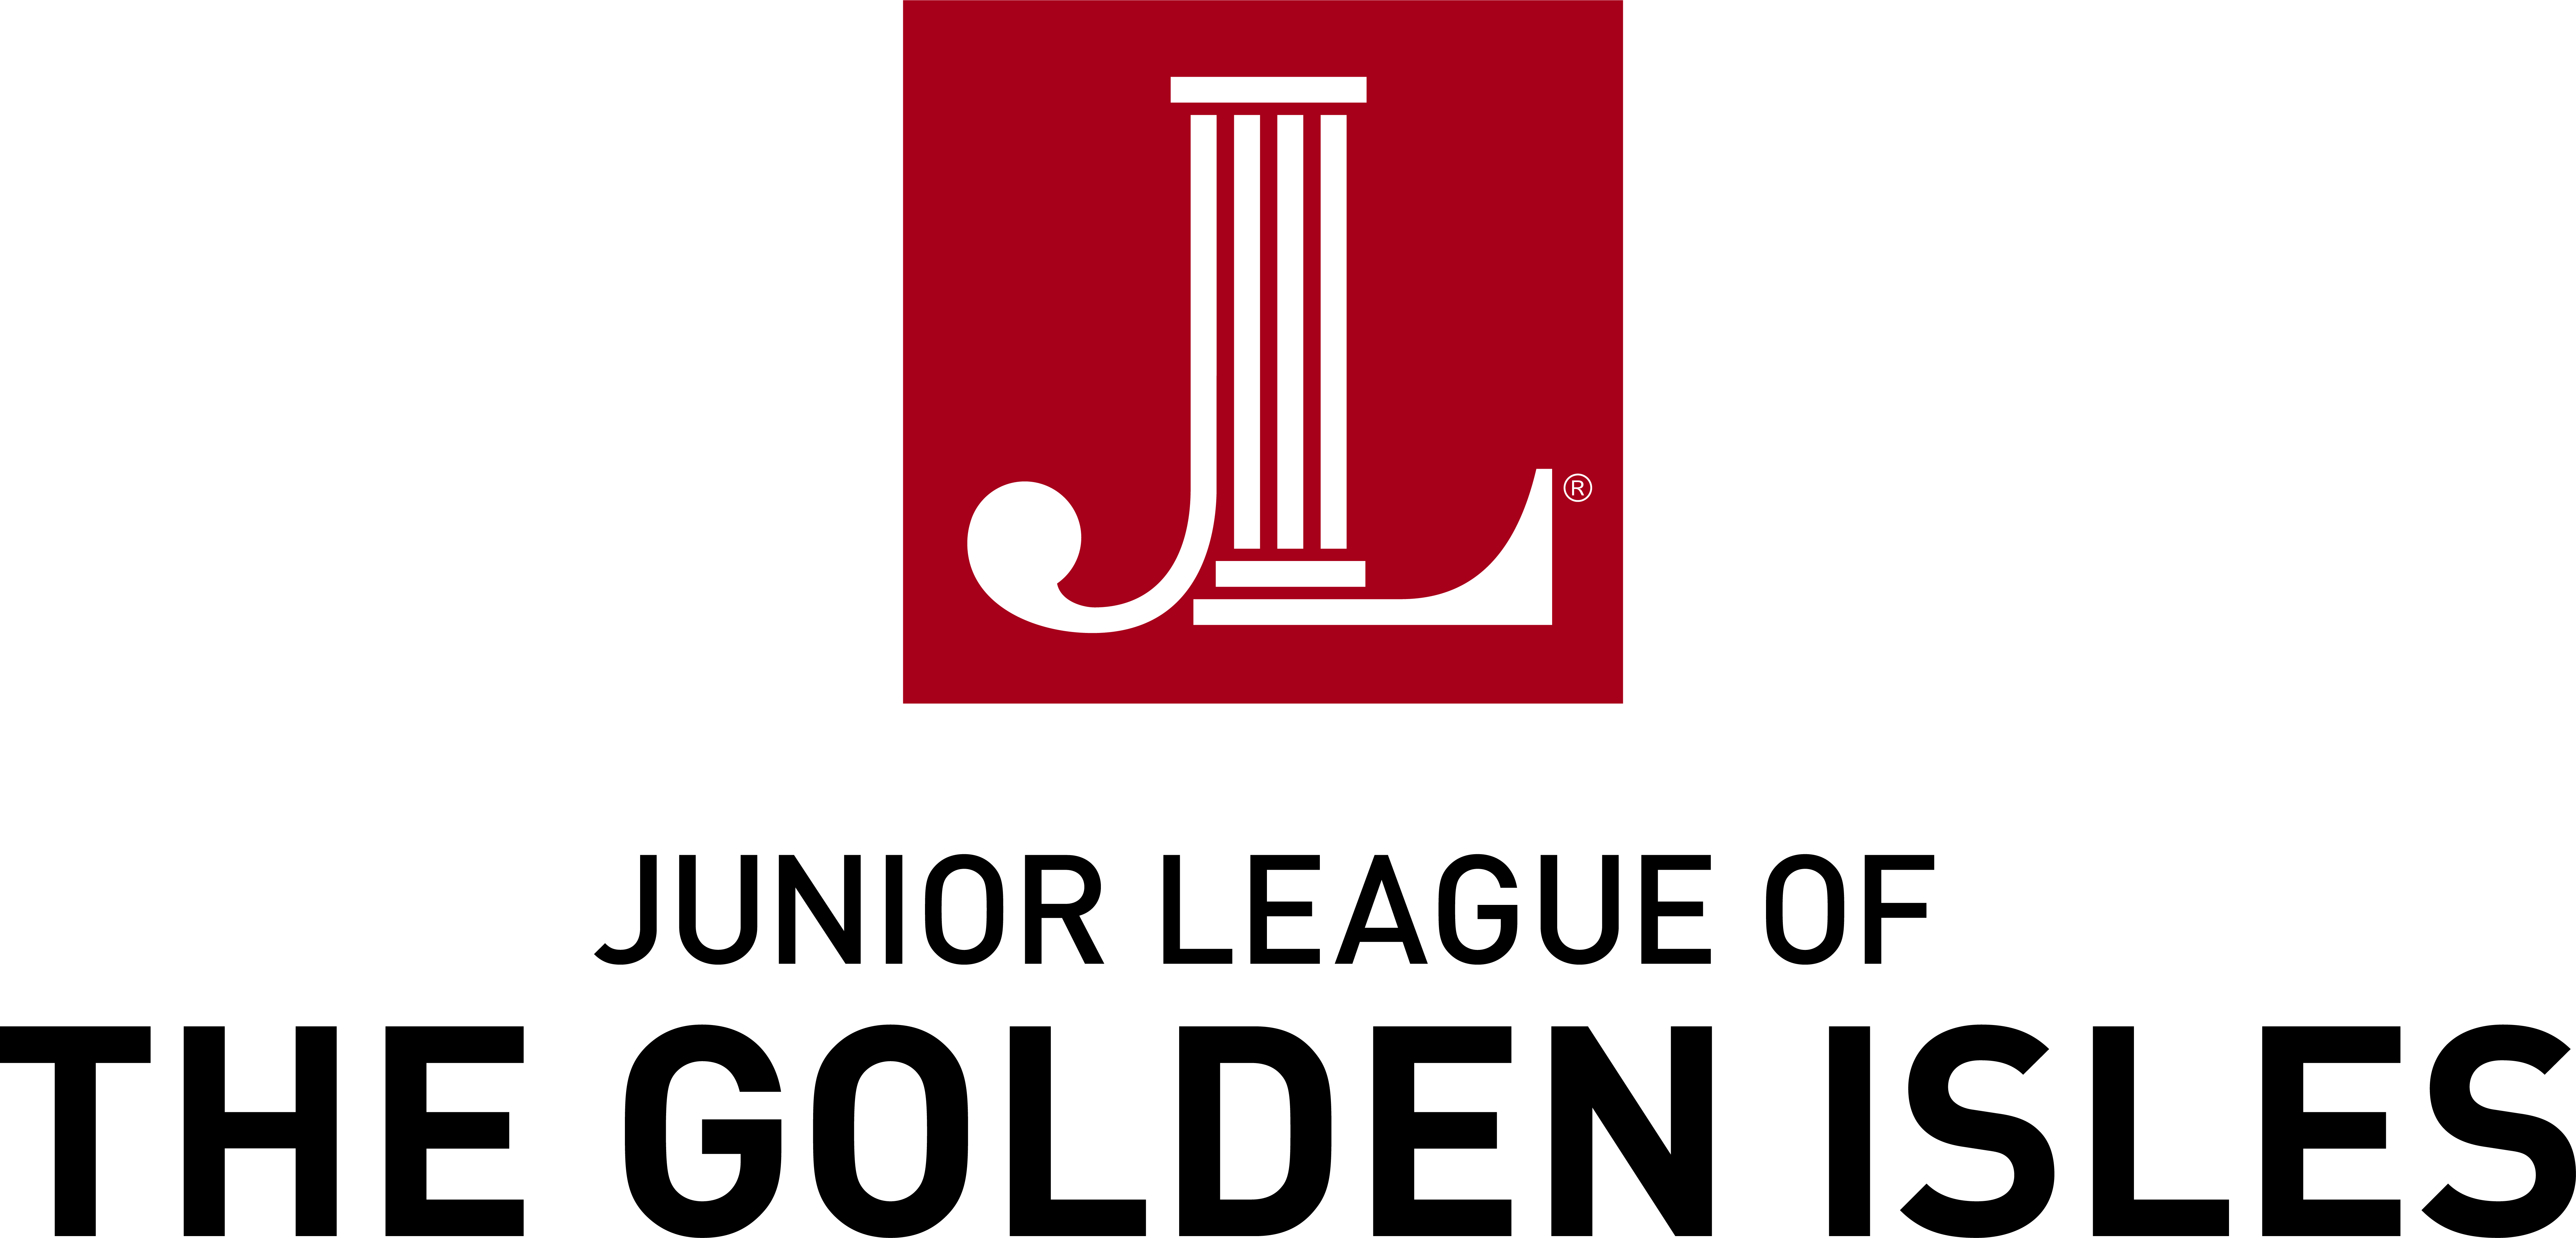 Junior League of the Golden Isles